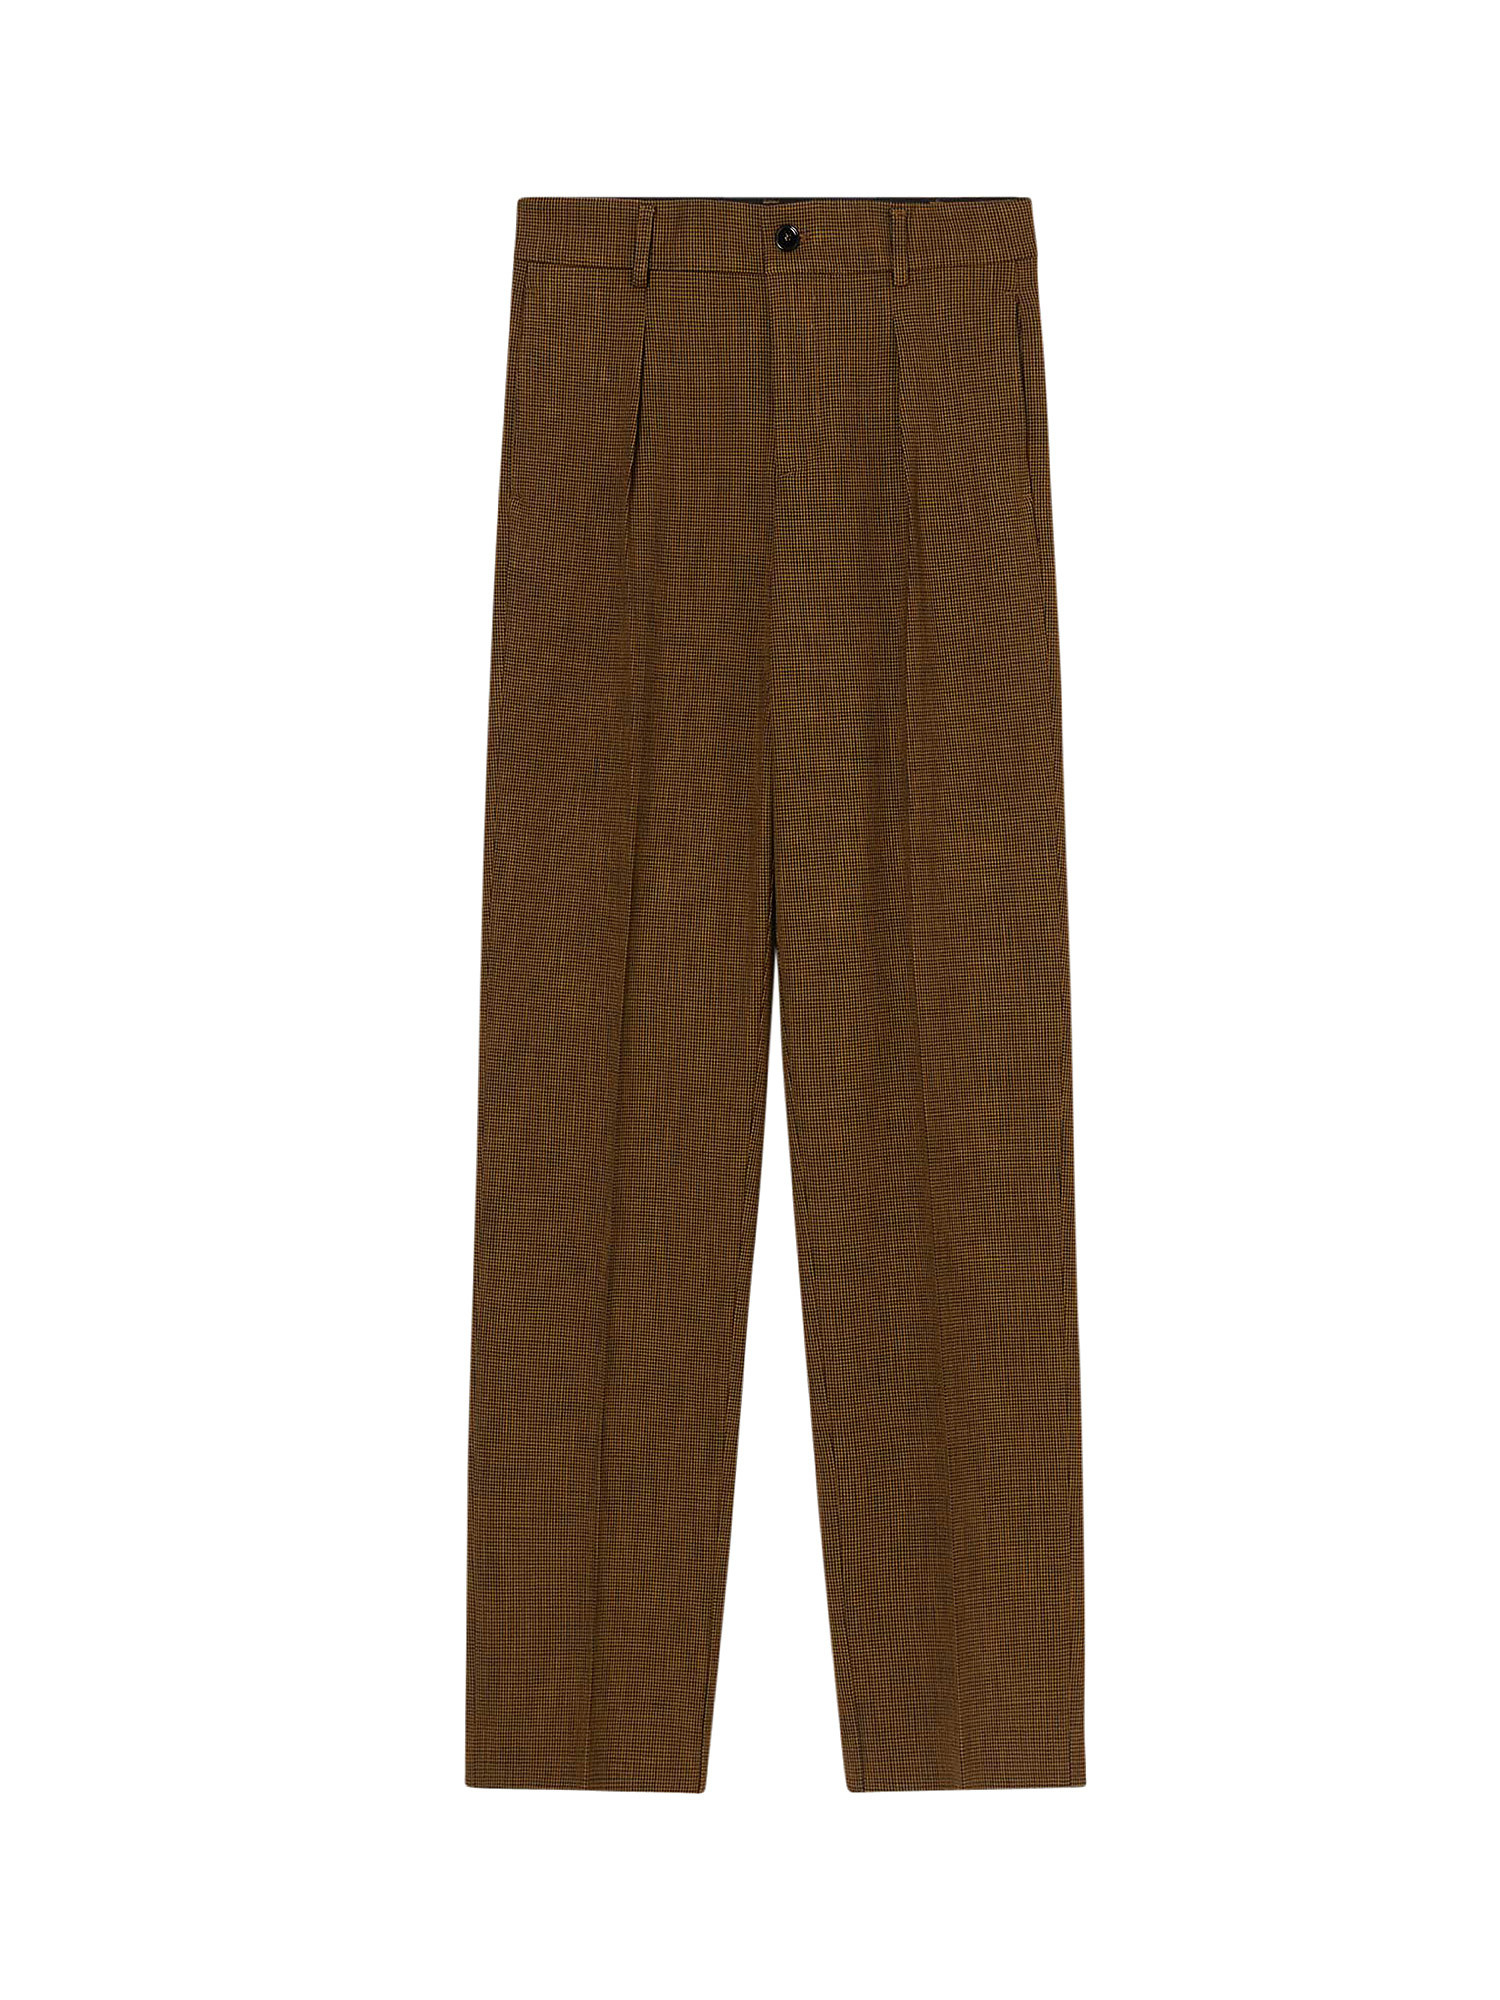 Pantaloni, Multicolor, large